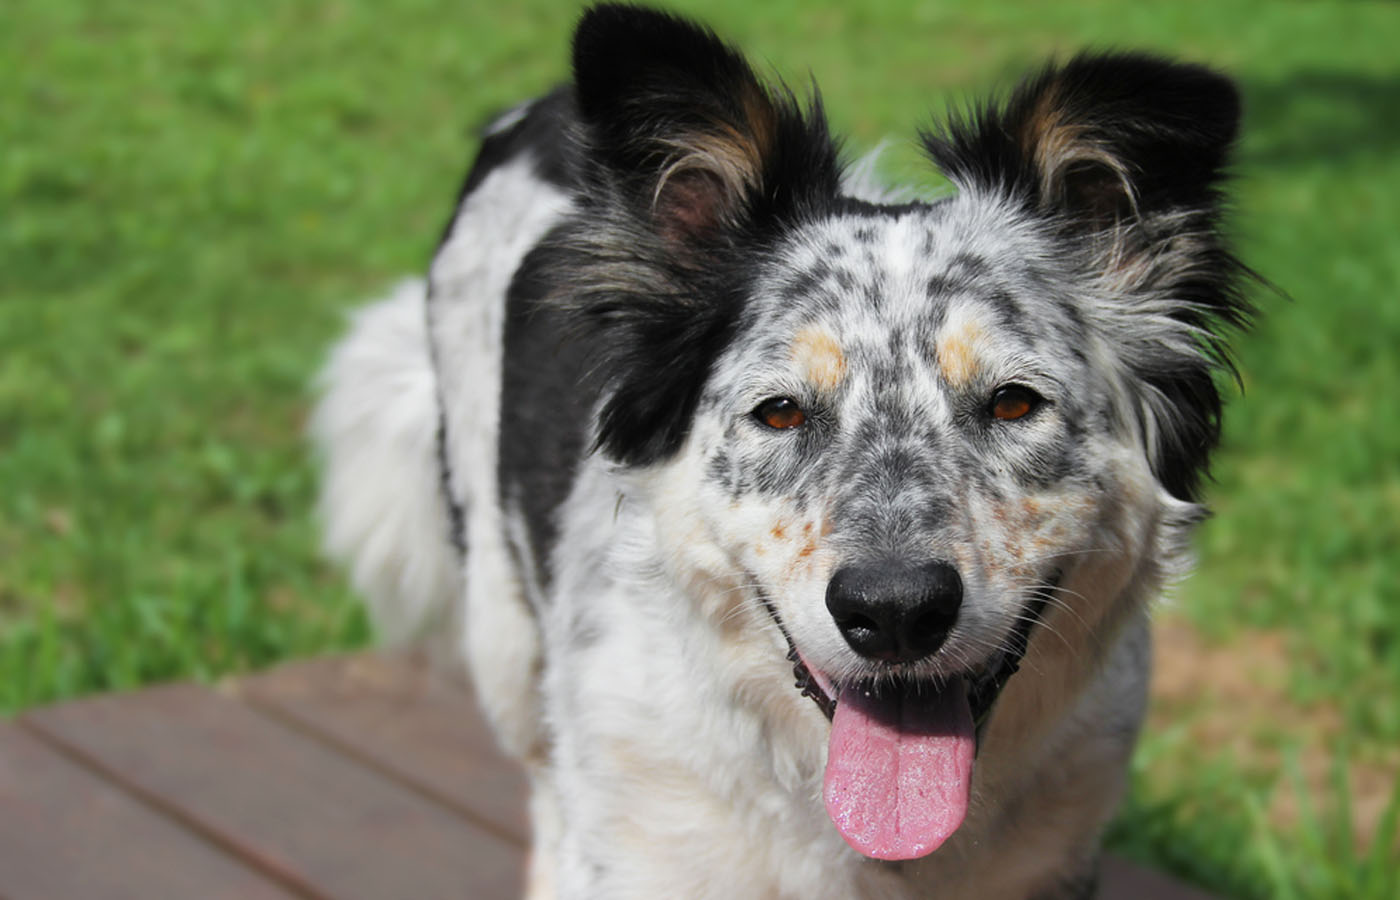 Border collie / Australian shepherd dog panting outside looking alert happy hot attentive impatient joyful